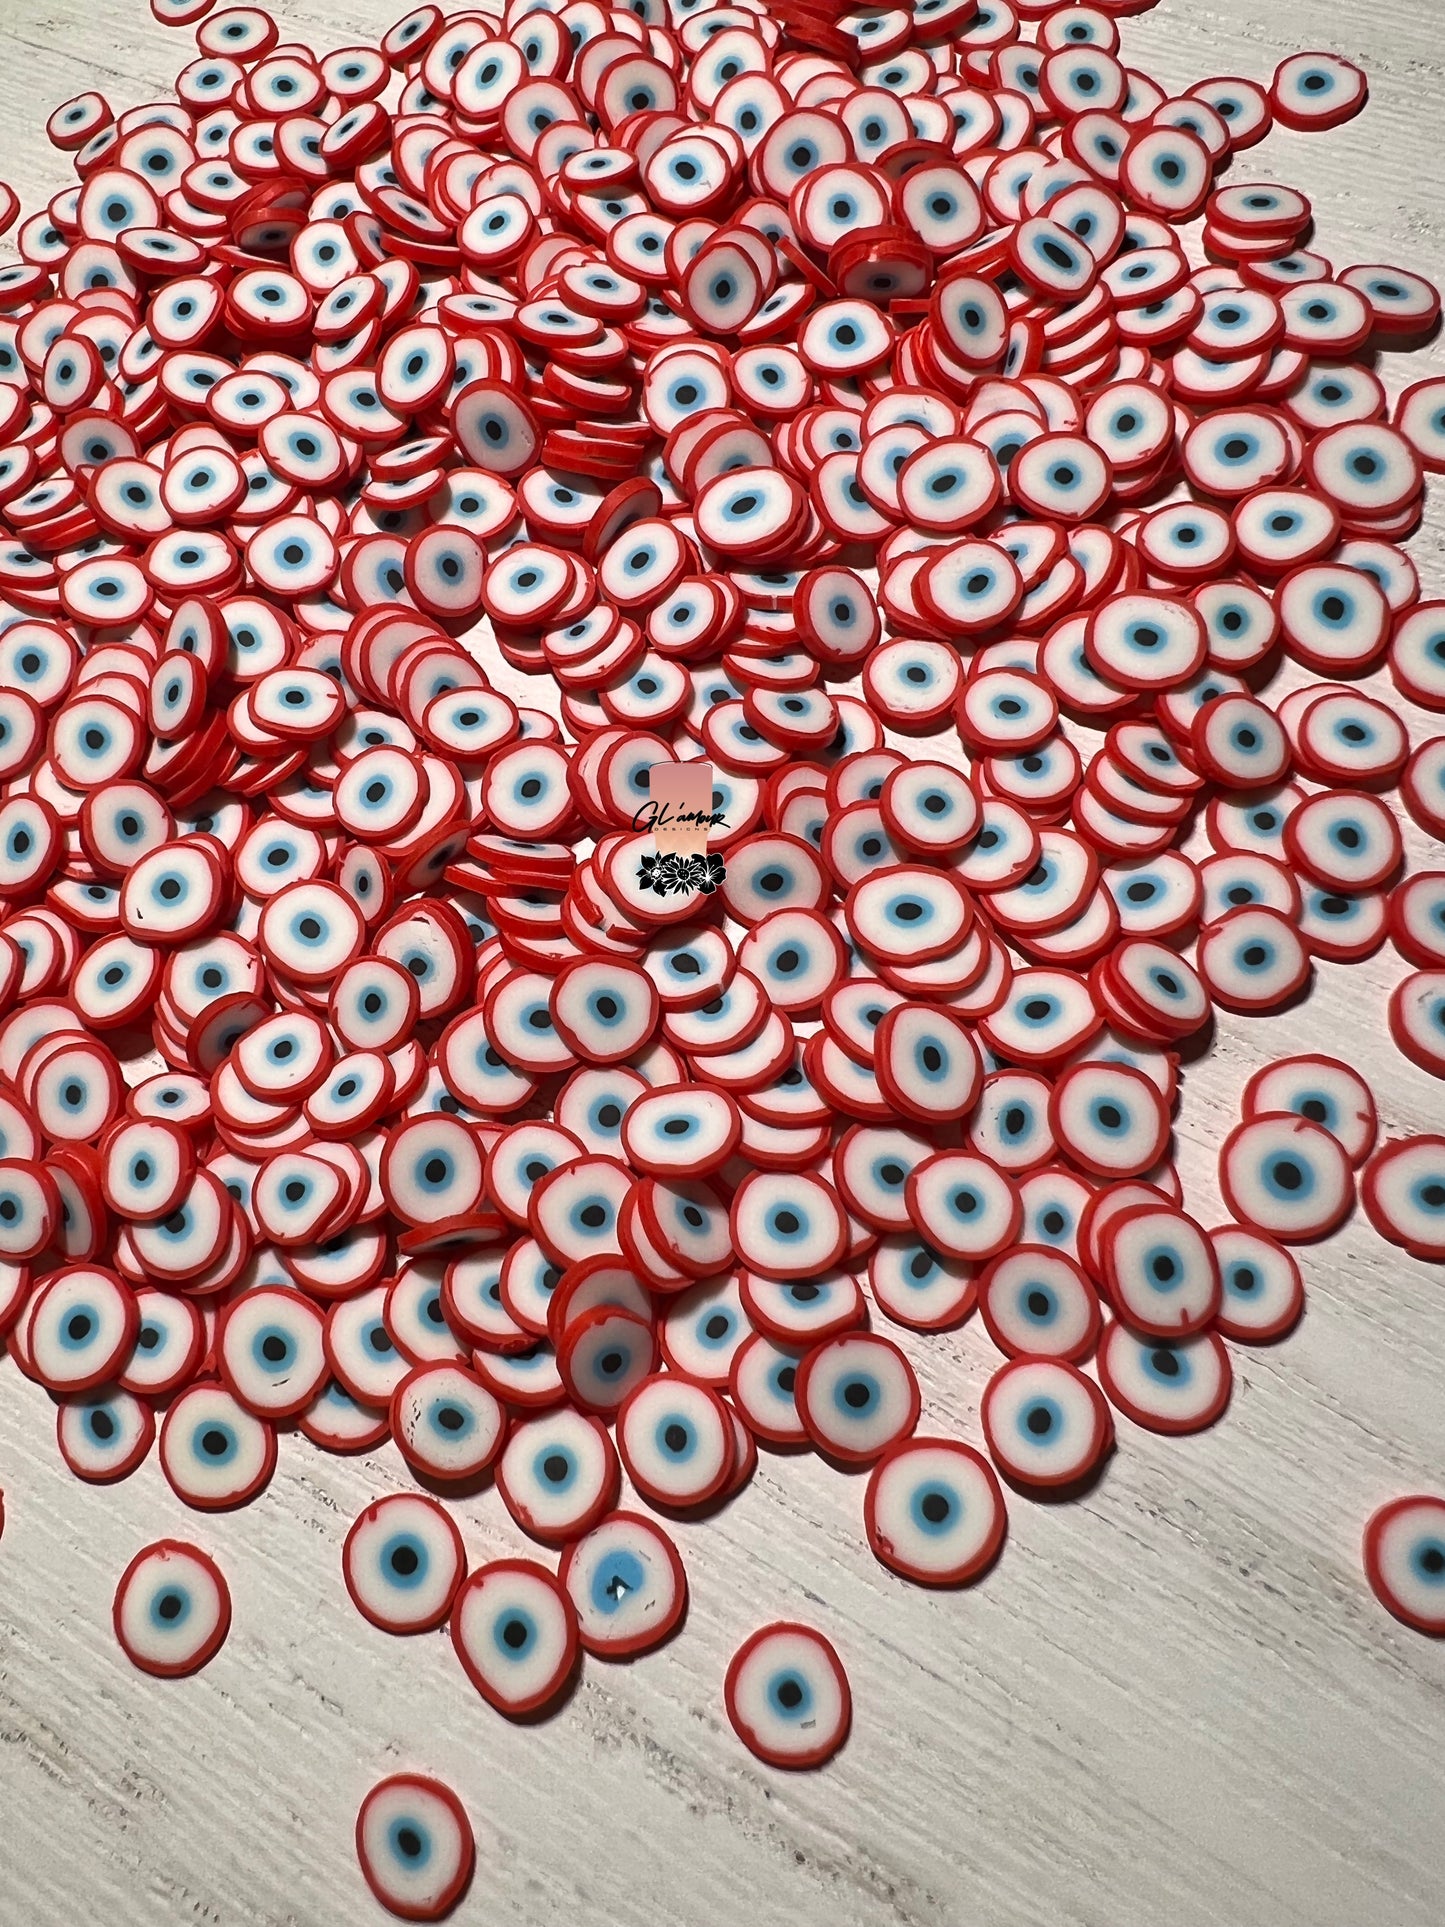 5mm Cherry Red Ojo (Eyeball) Polymer Slices -small